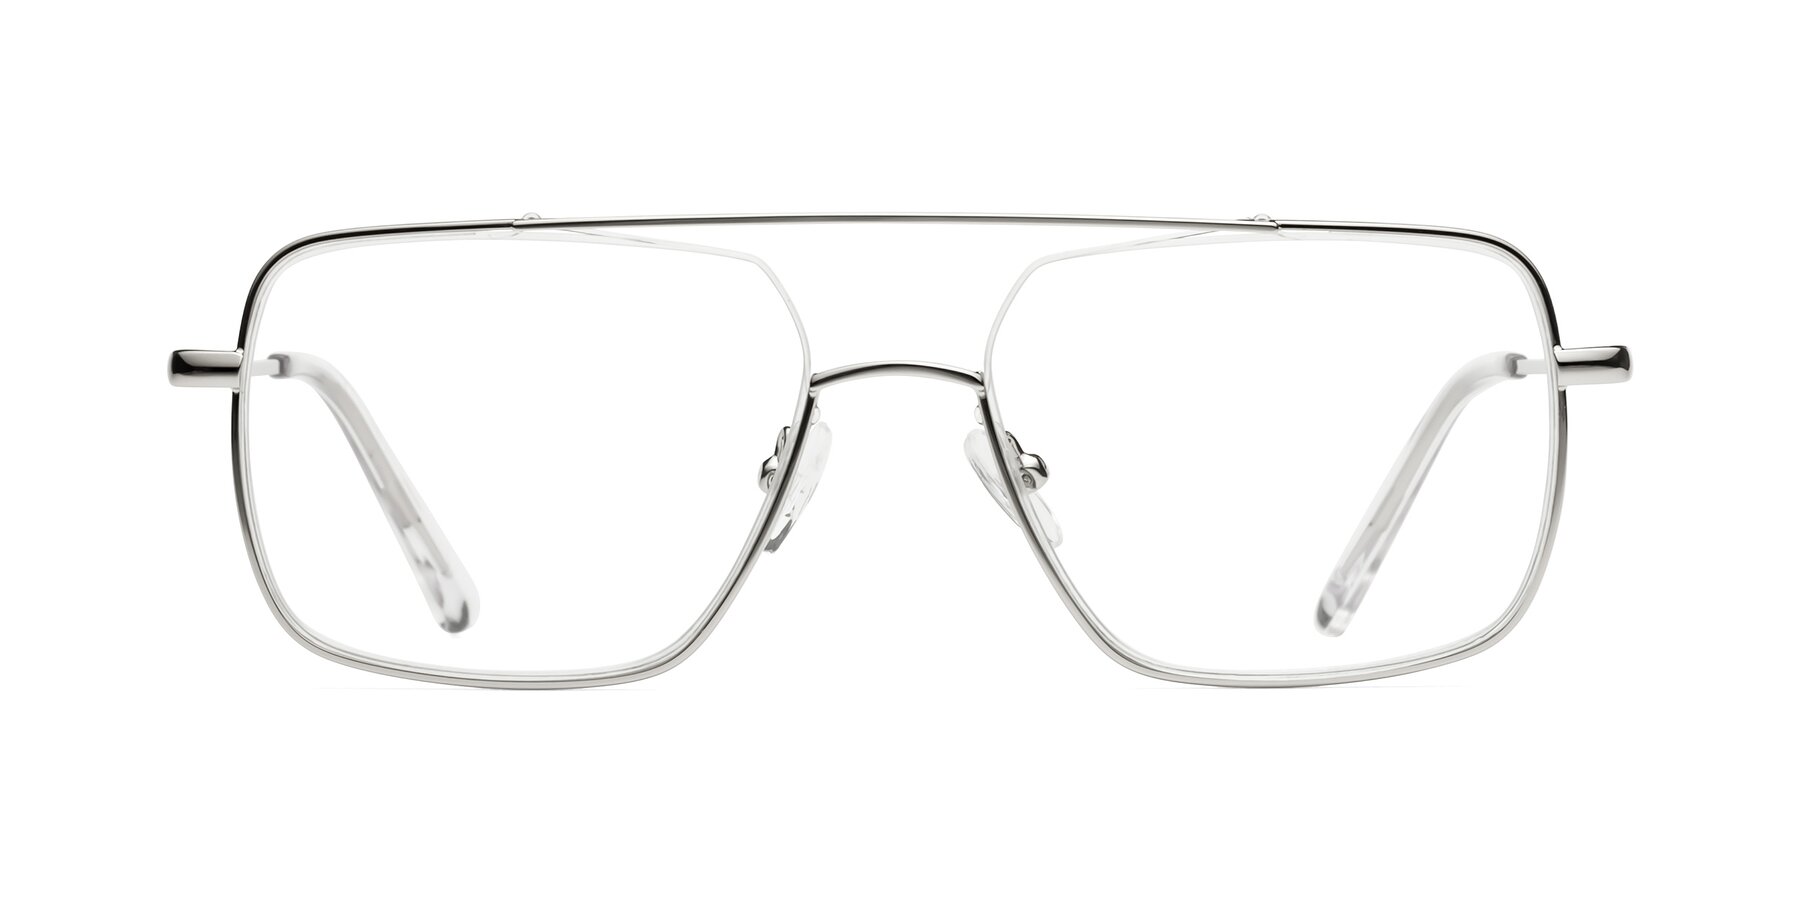 Jever - Silver Sunglasses Frame